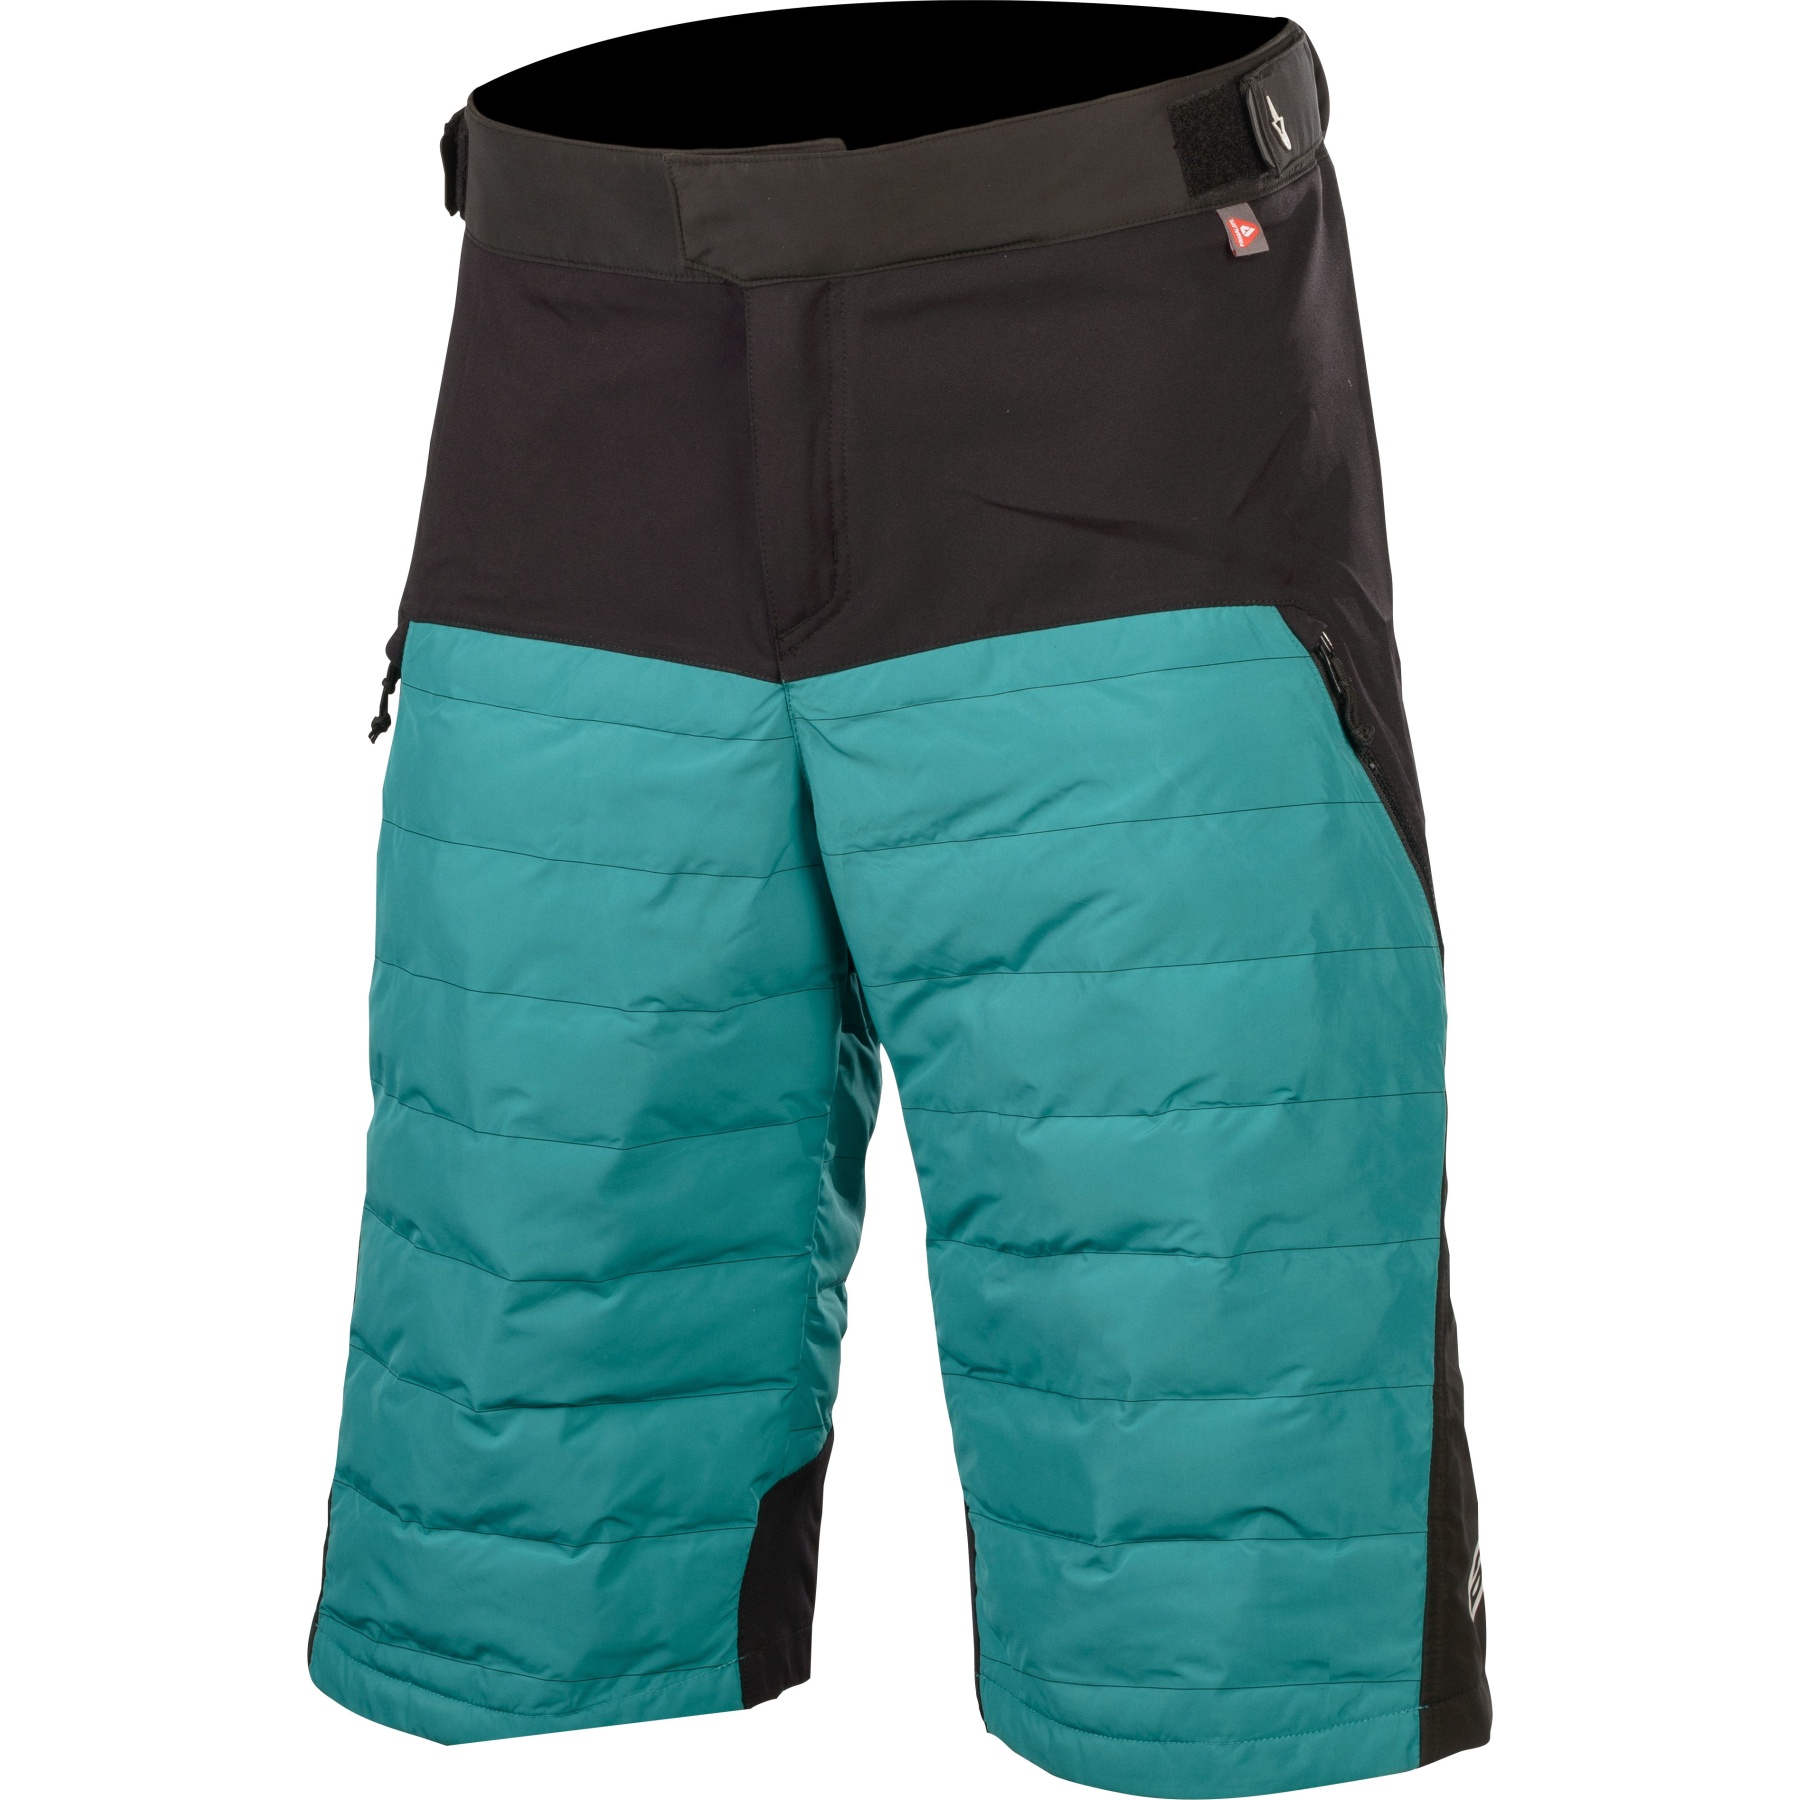 Productfoto van Alpinestars Denali Shorts - emerald/black